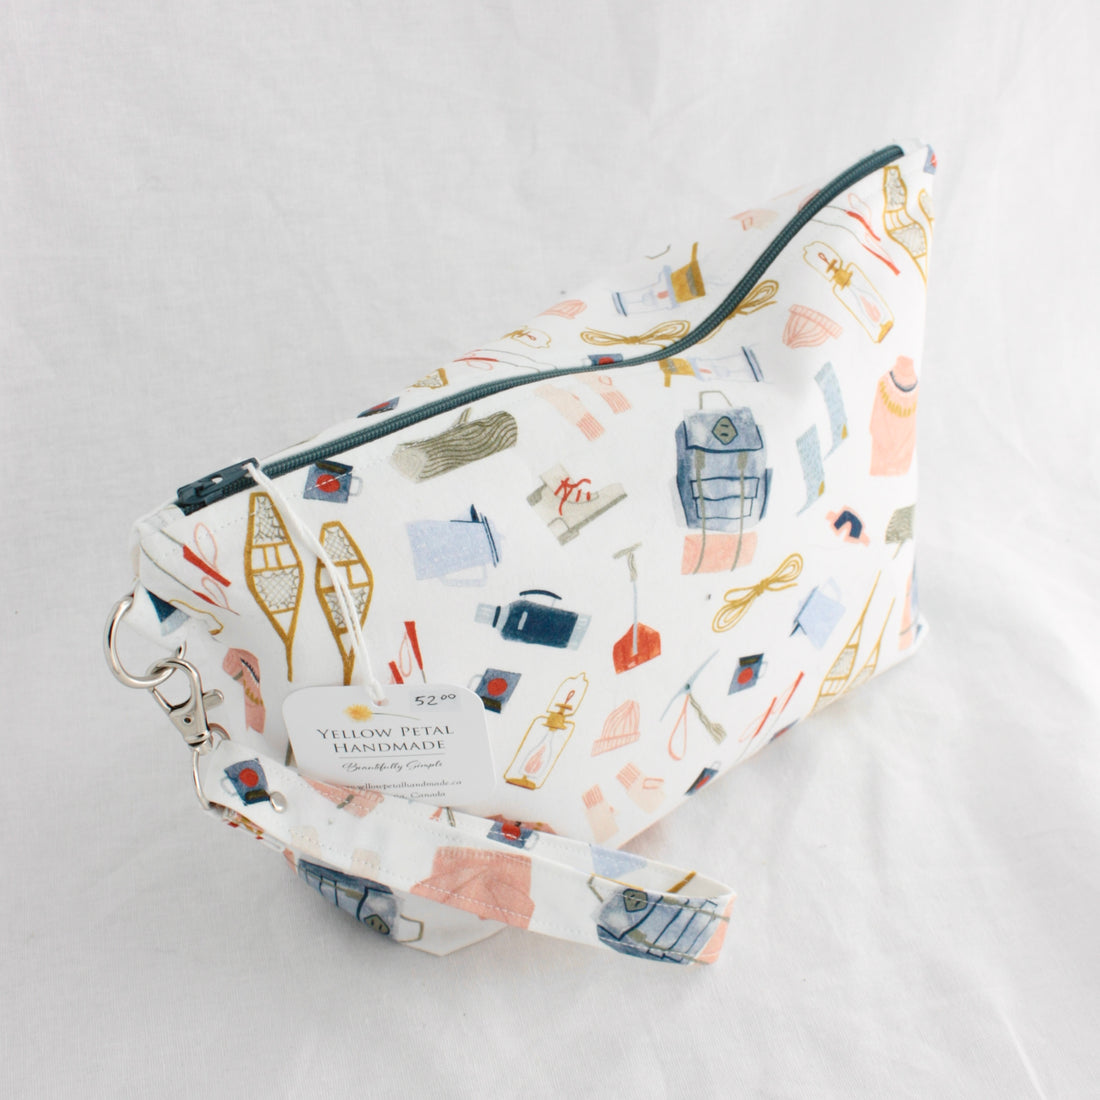 Small Zippered Project Bag | Yellow Petal Handmade